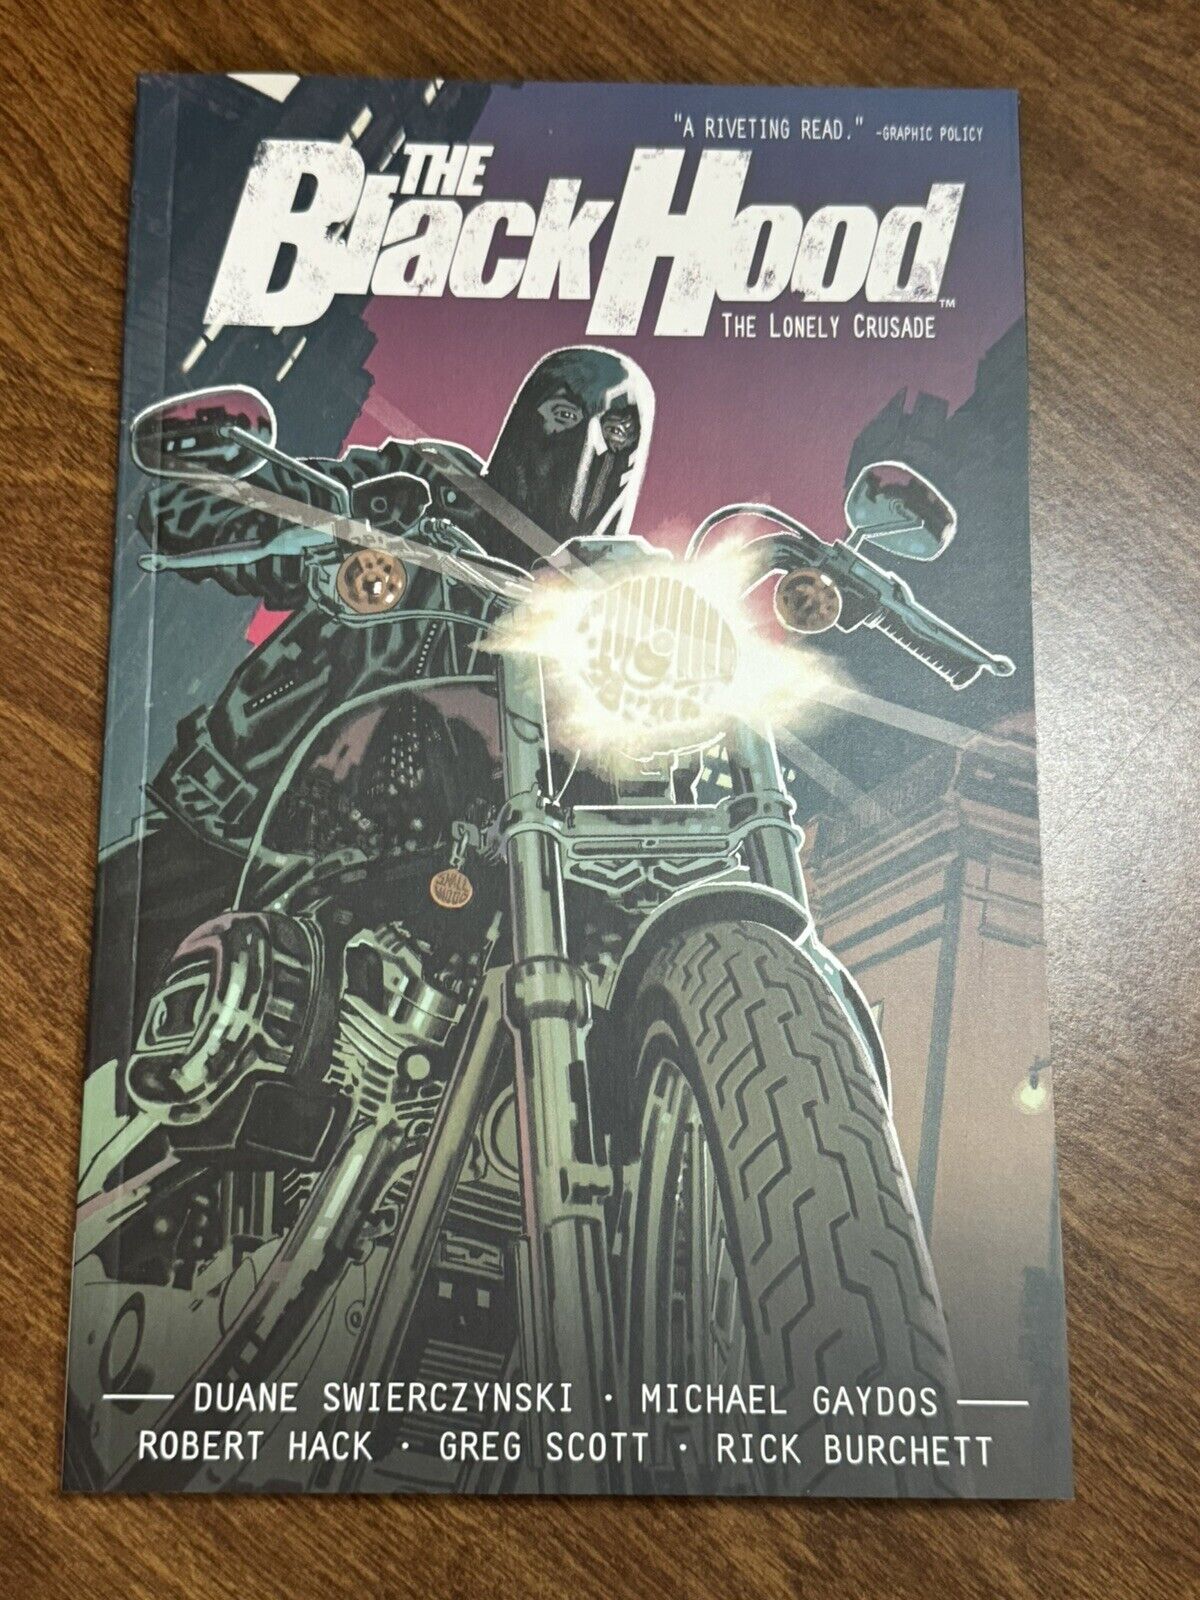 The Black Hood #2 (ARCHIE COMICS Publications, Inc. June 2018)